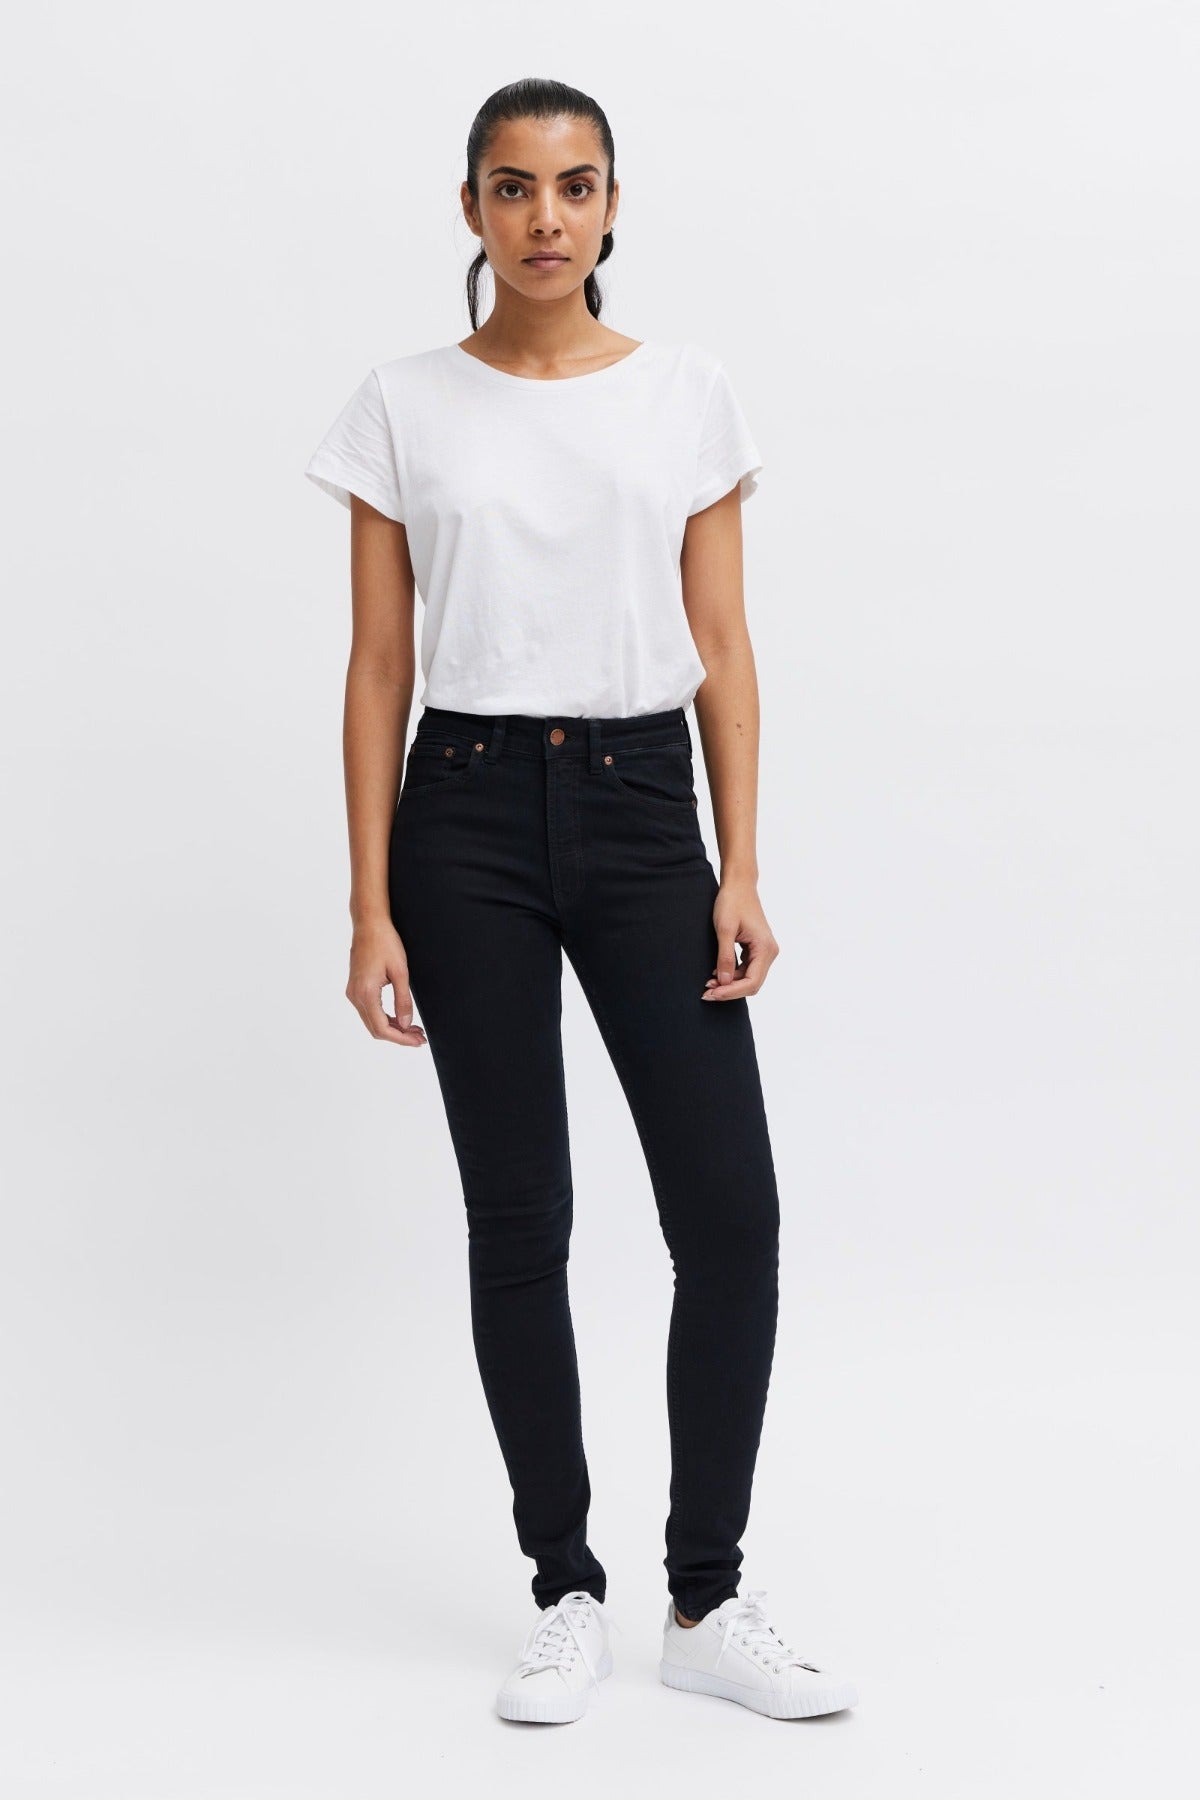 Black denim jeans - Circular fashion